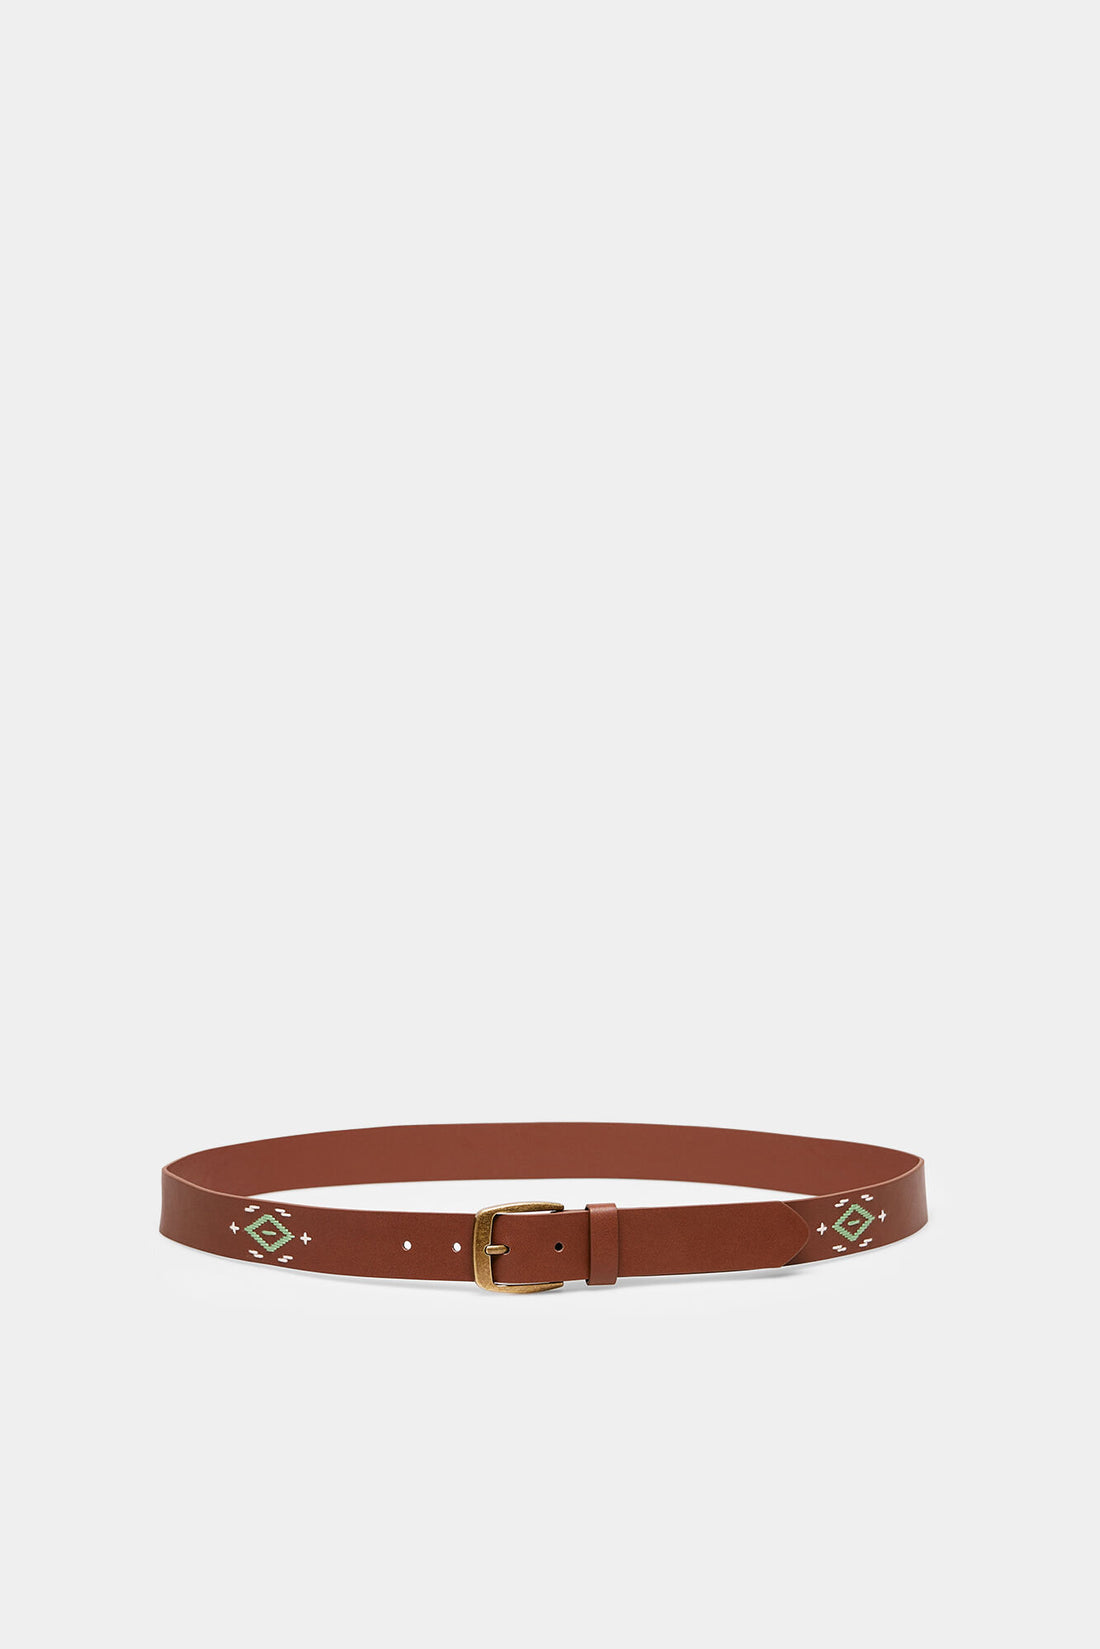 Thin Brown Belt With Design_2867126_33_01